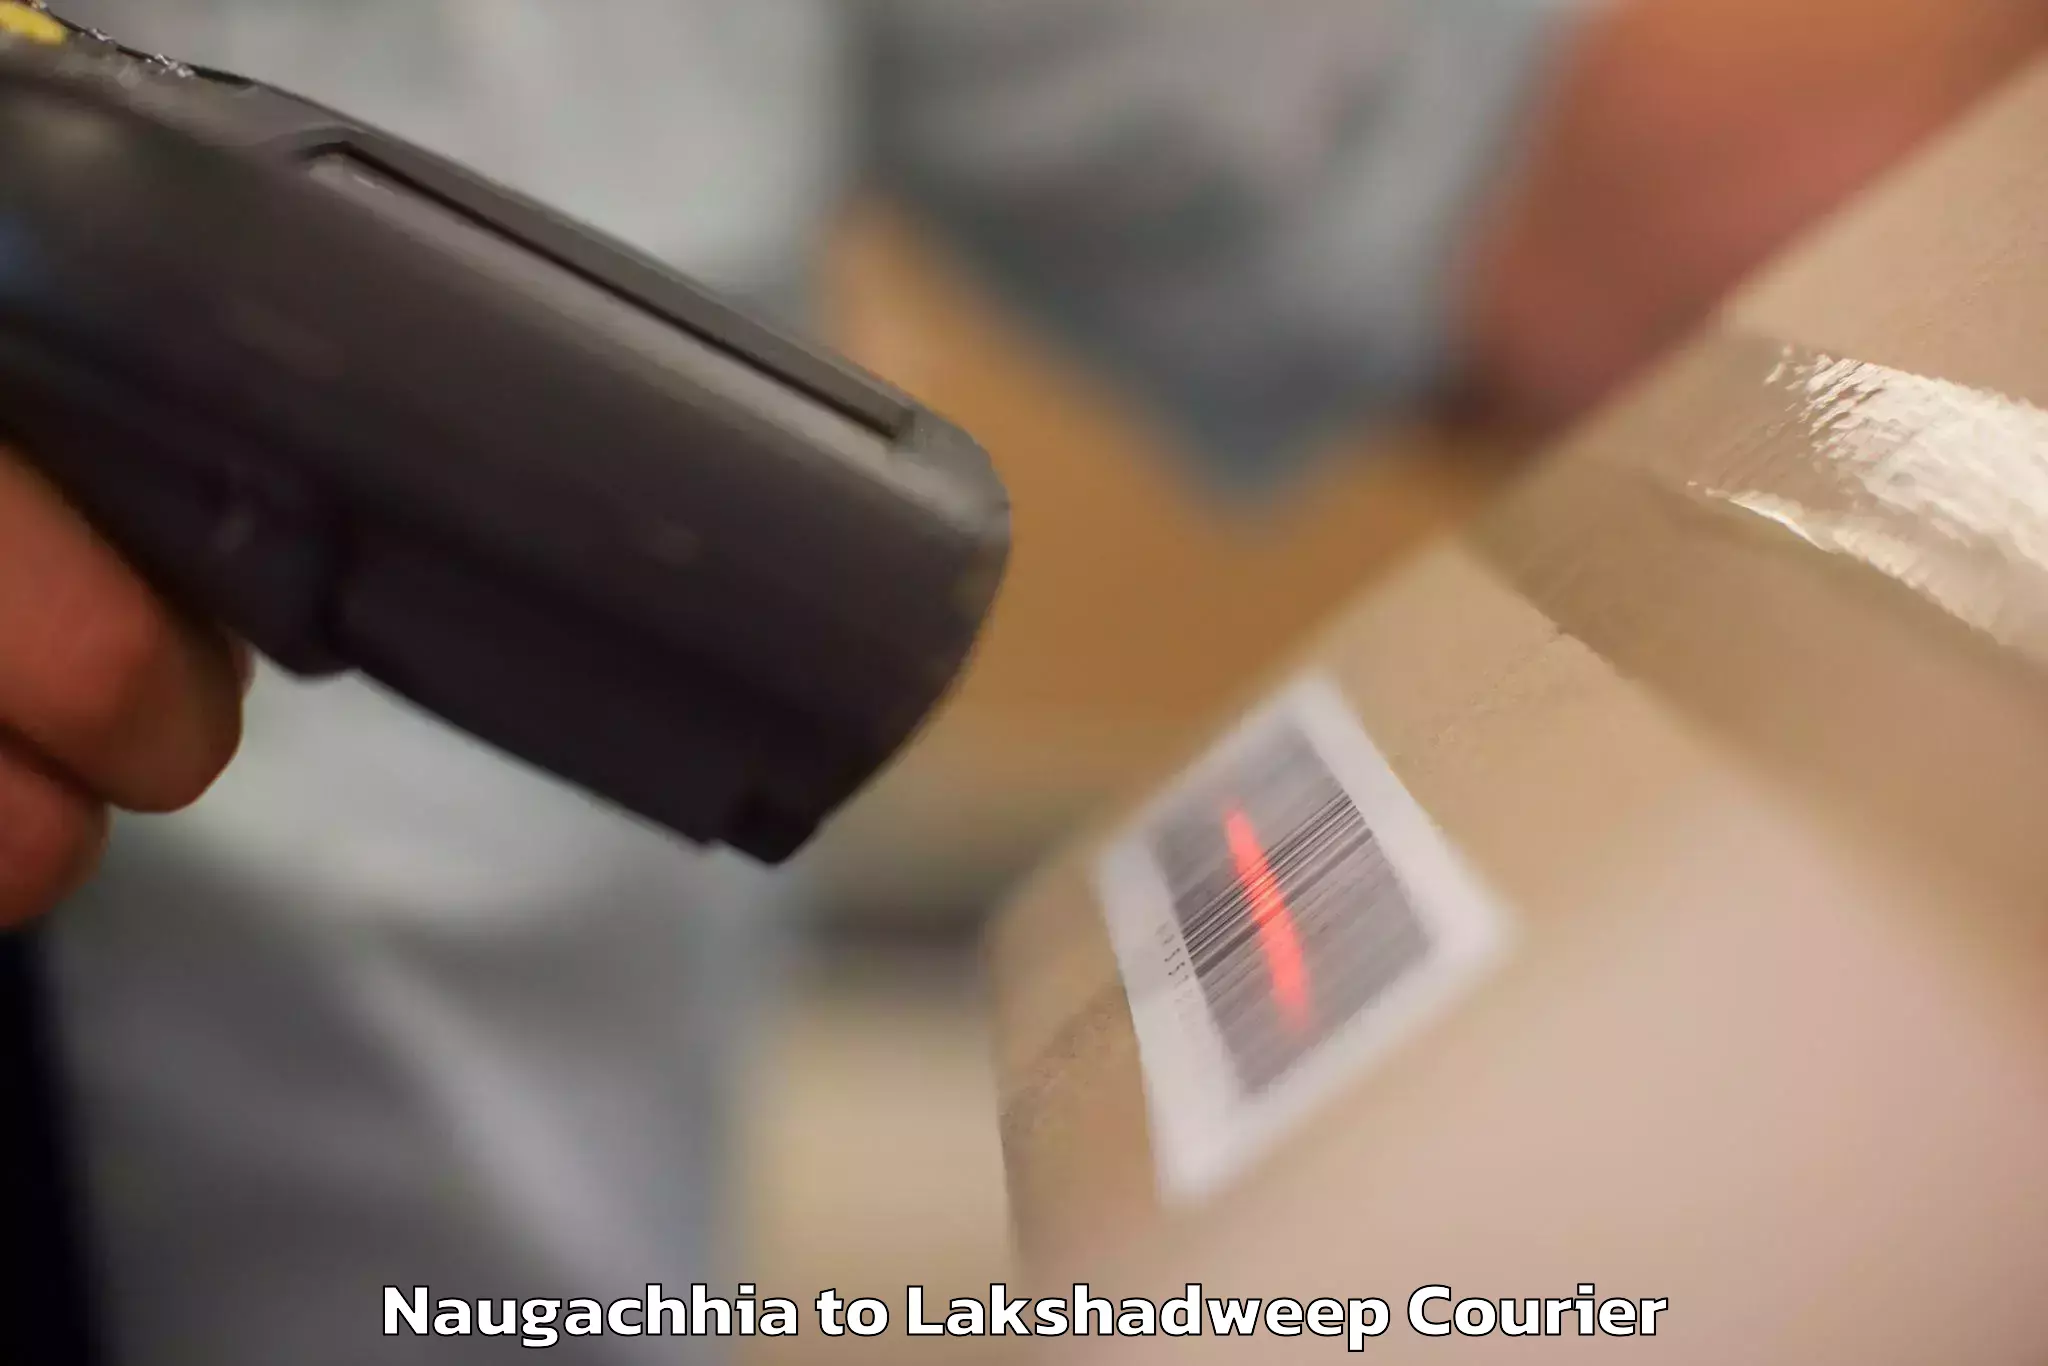 Instant baggage transport quote Naugachhia to Lakshadweep